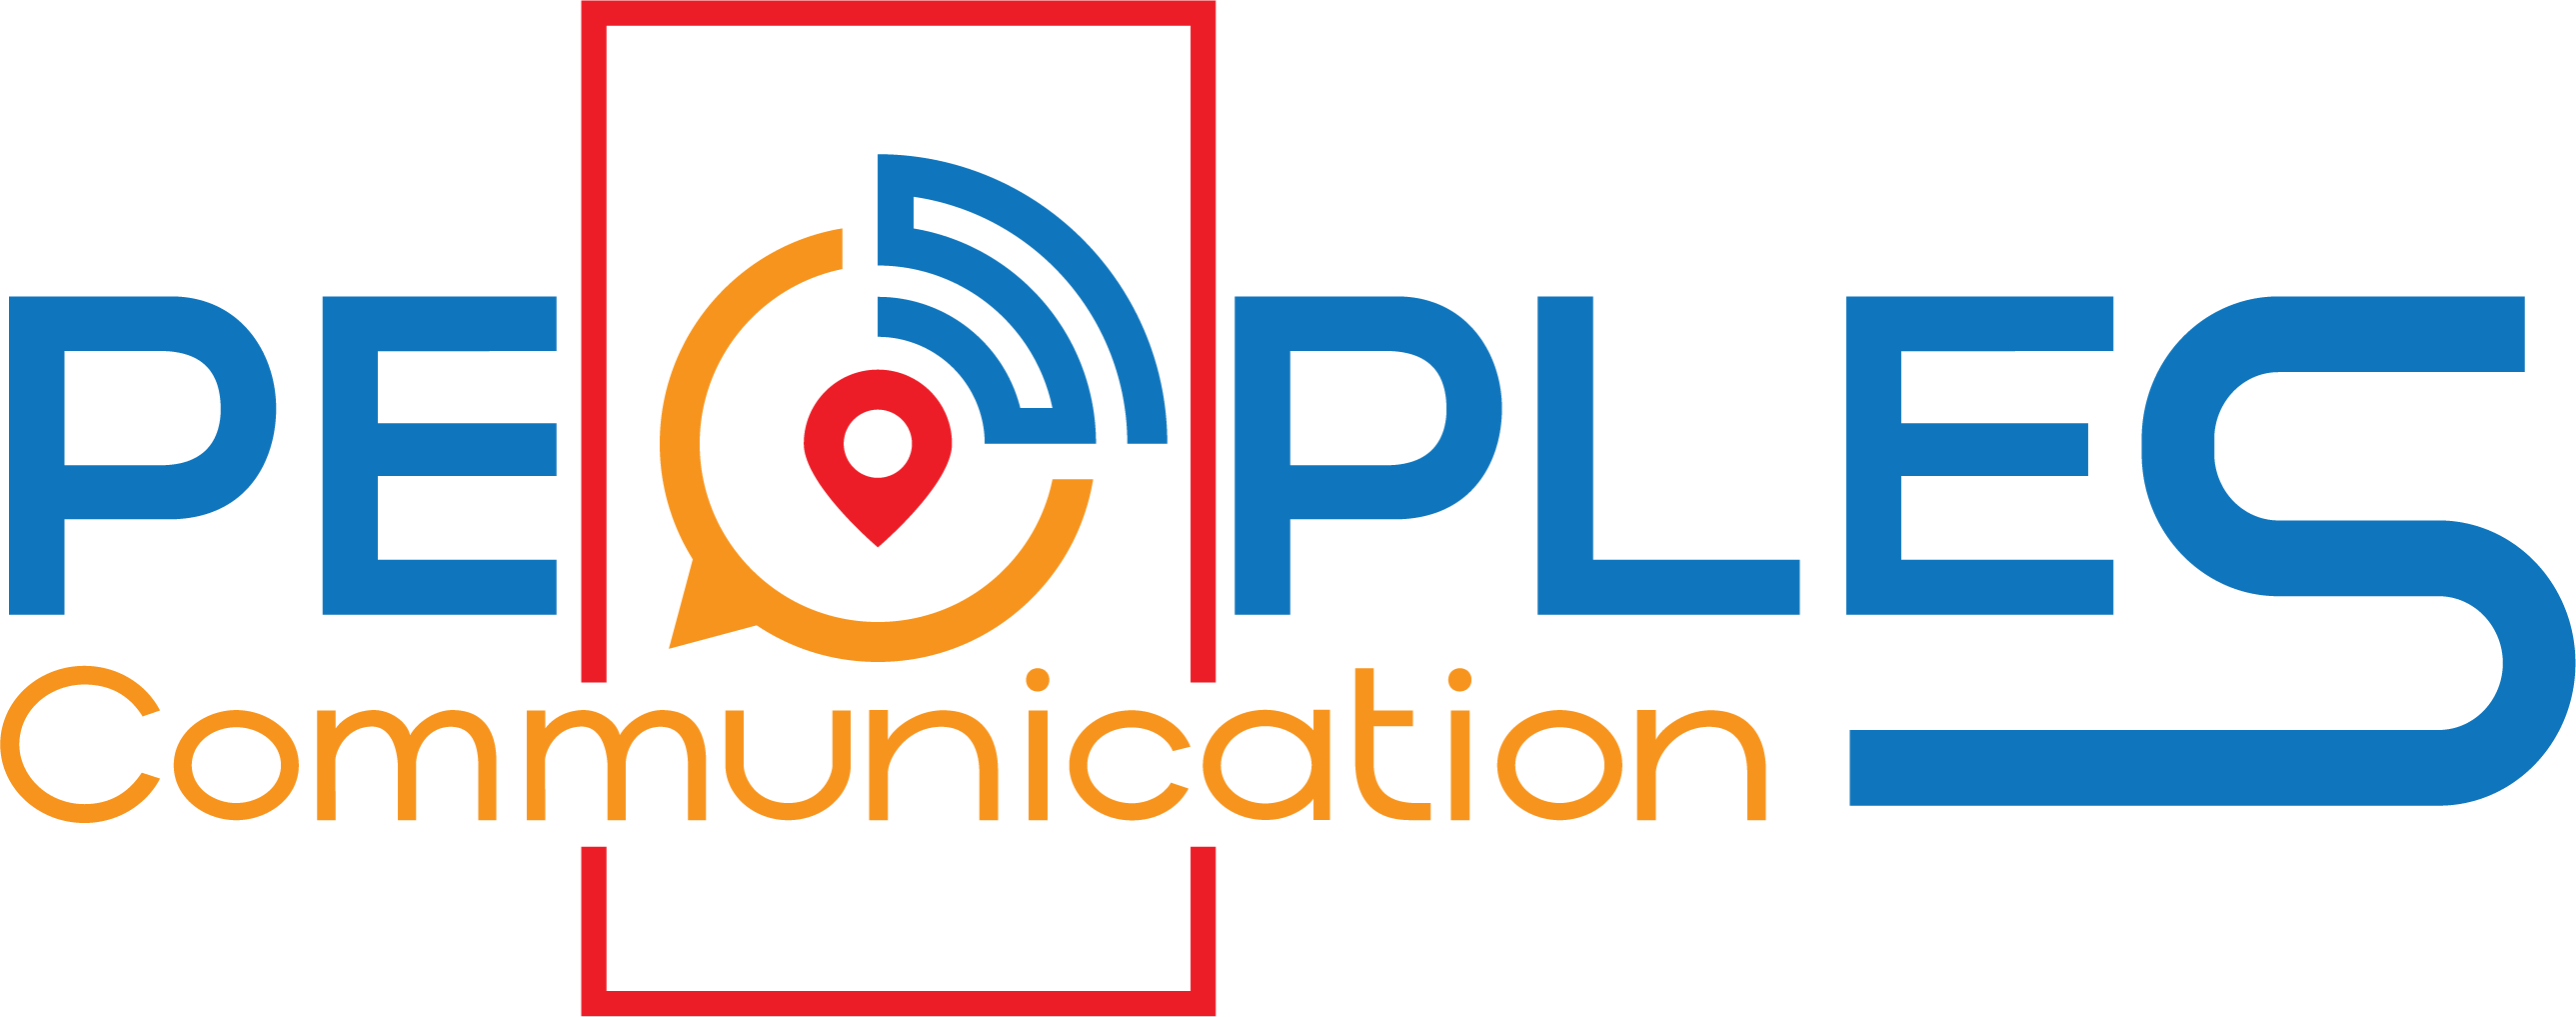 Peoples Communication-logo